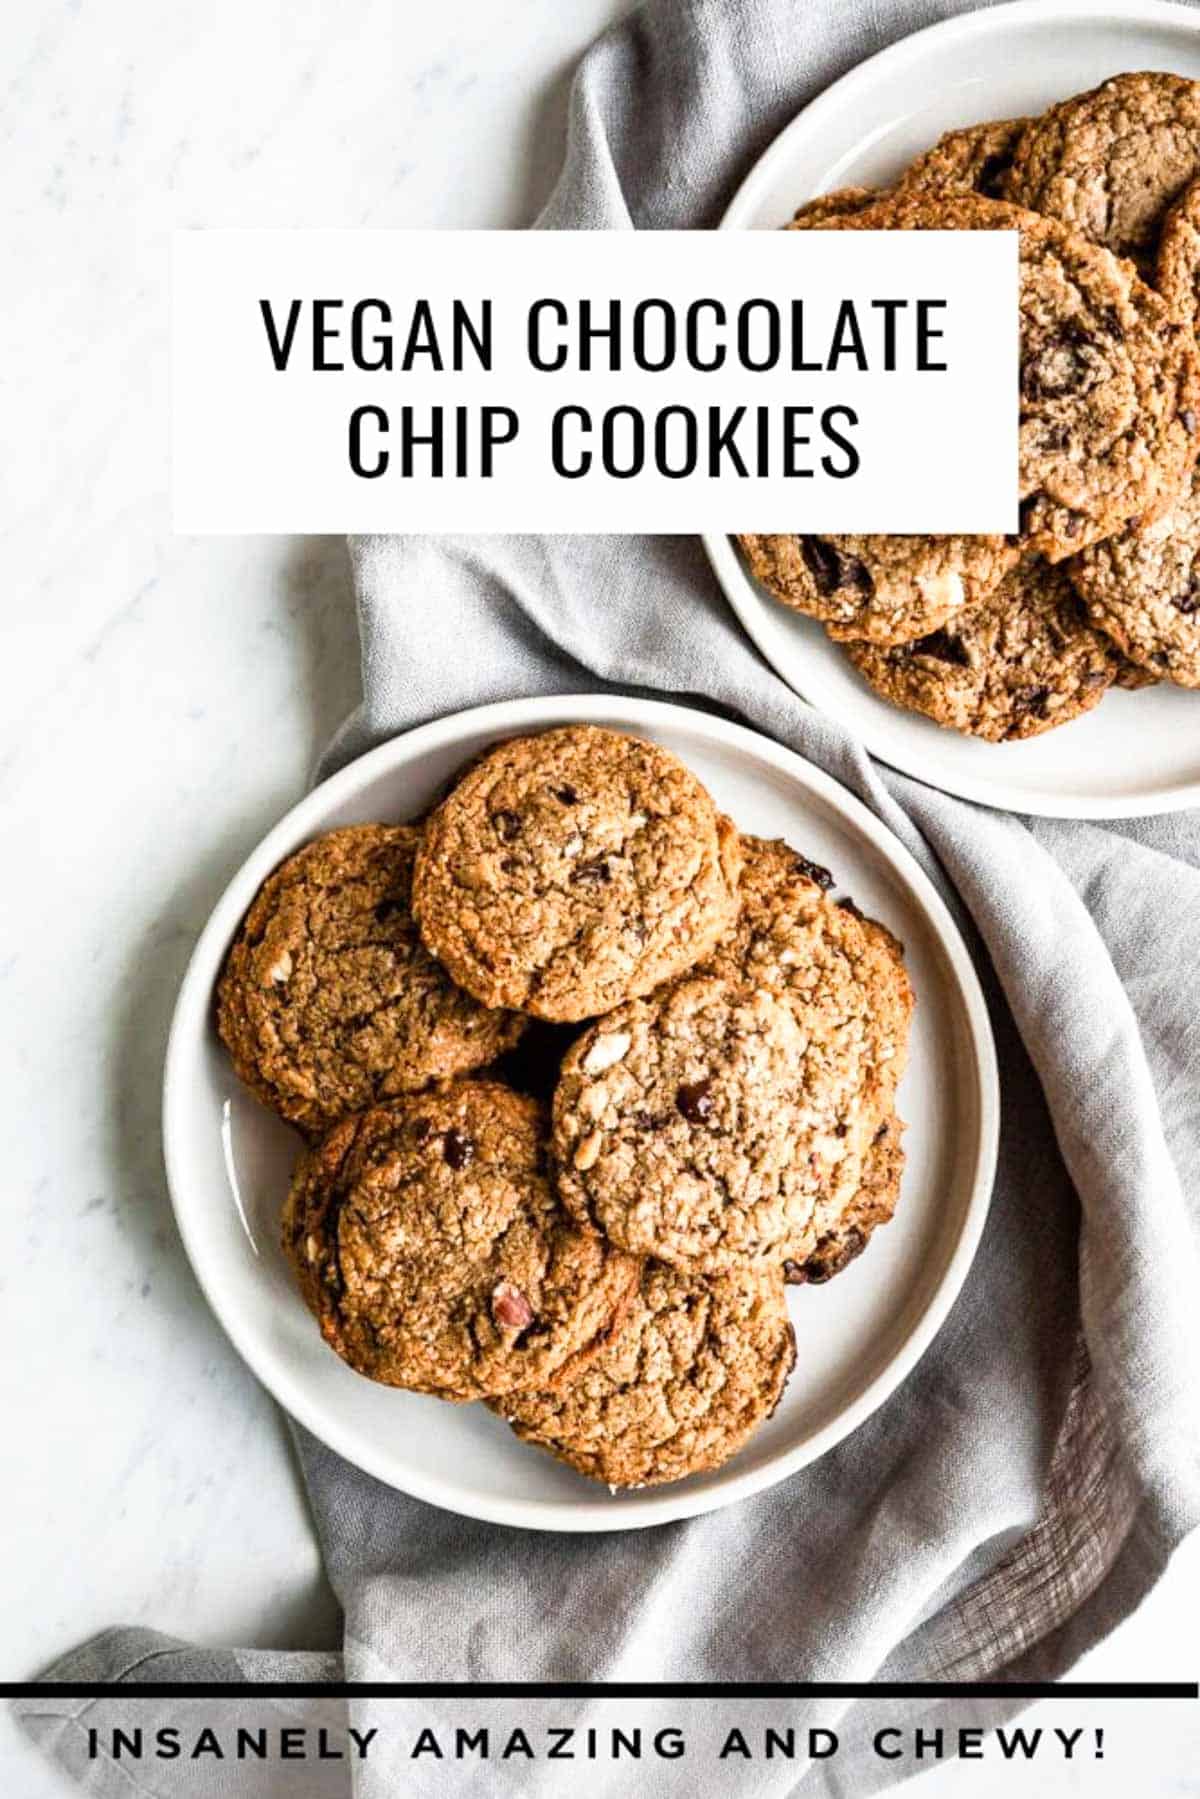 The best vegan chocolate chip cookies